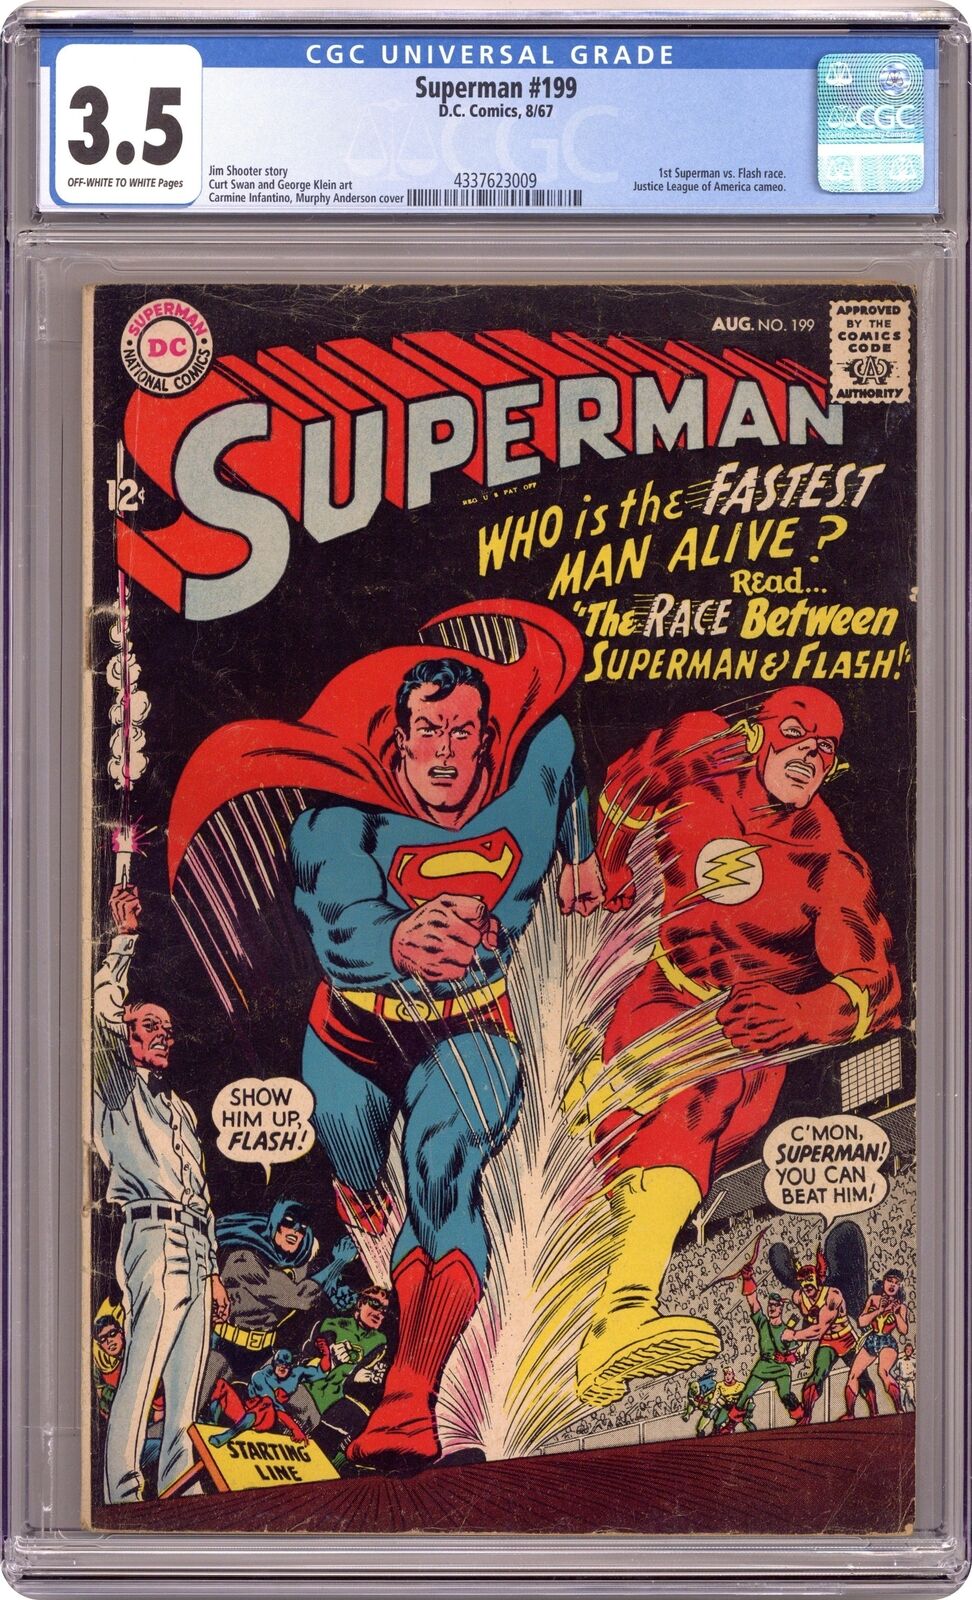 Superman #199 CGC 3.5 1967 4337623009 1st Superman vs Flash race